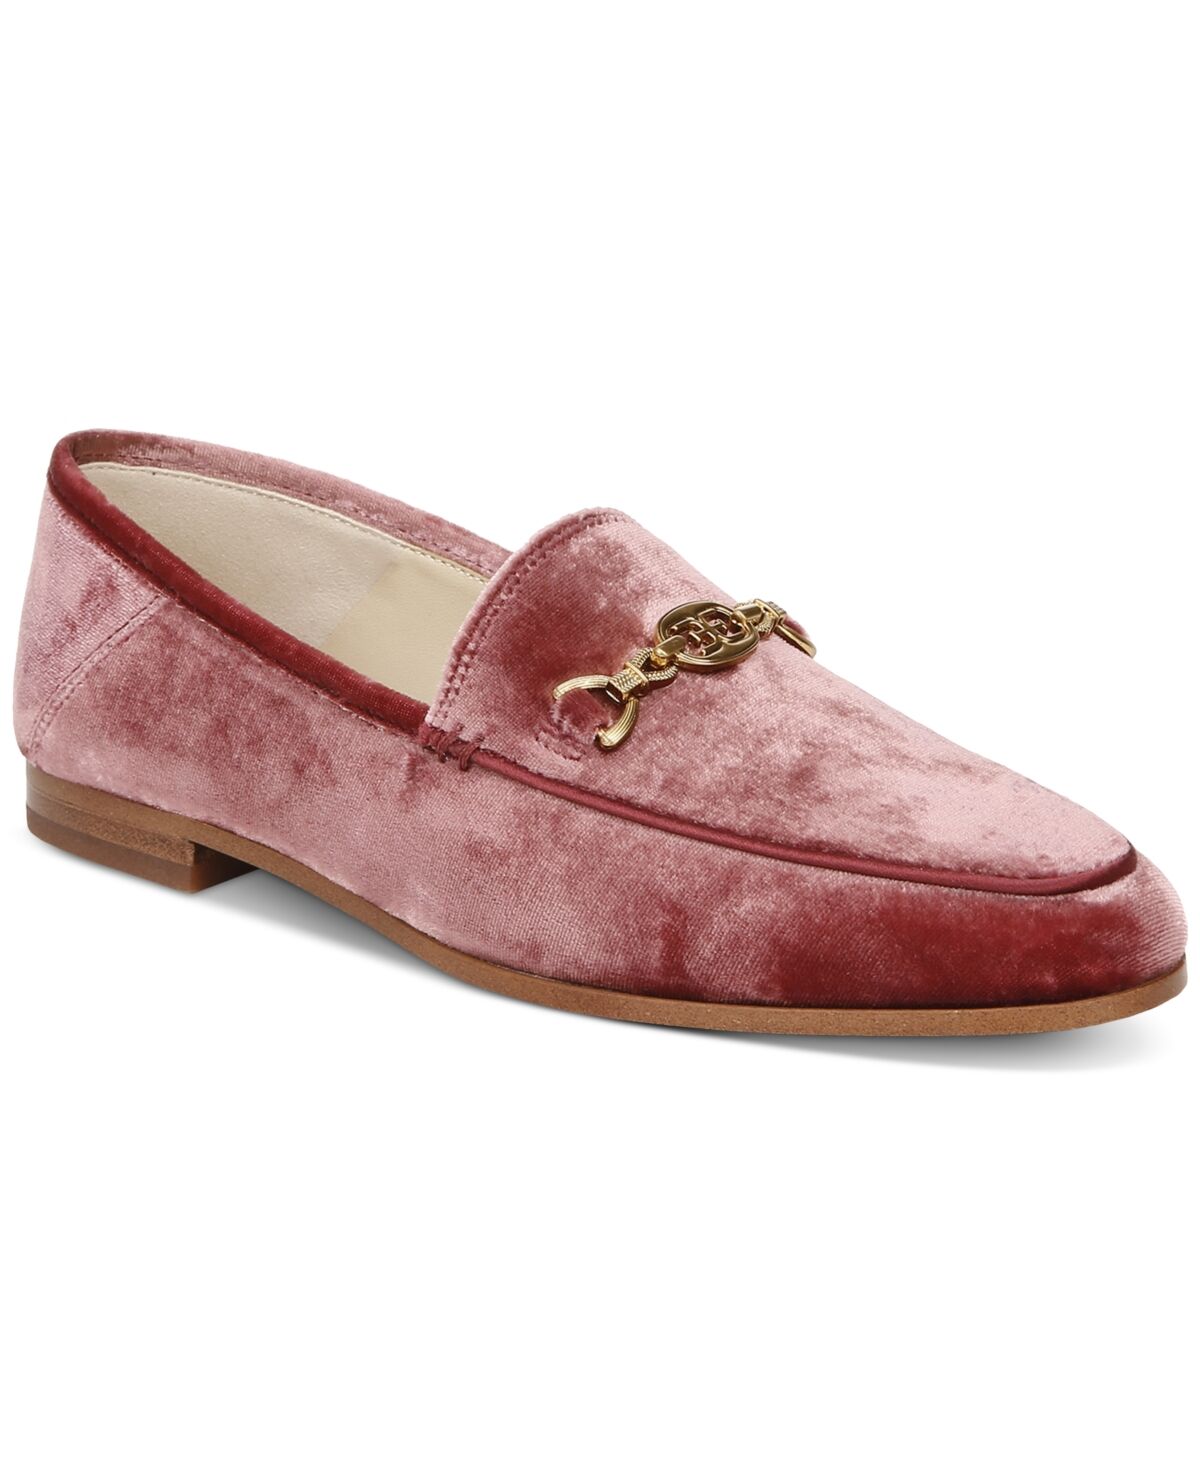 Sam Edelman Women's Loraine Tailored Loafers - Raspberry Mauve Velvet